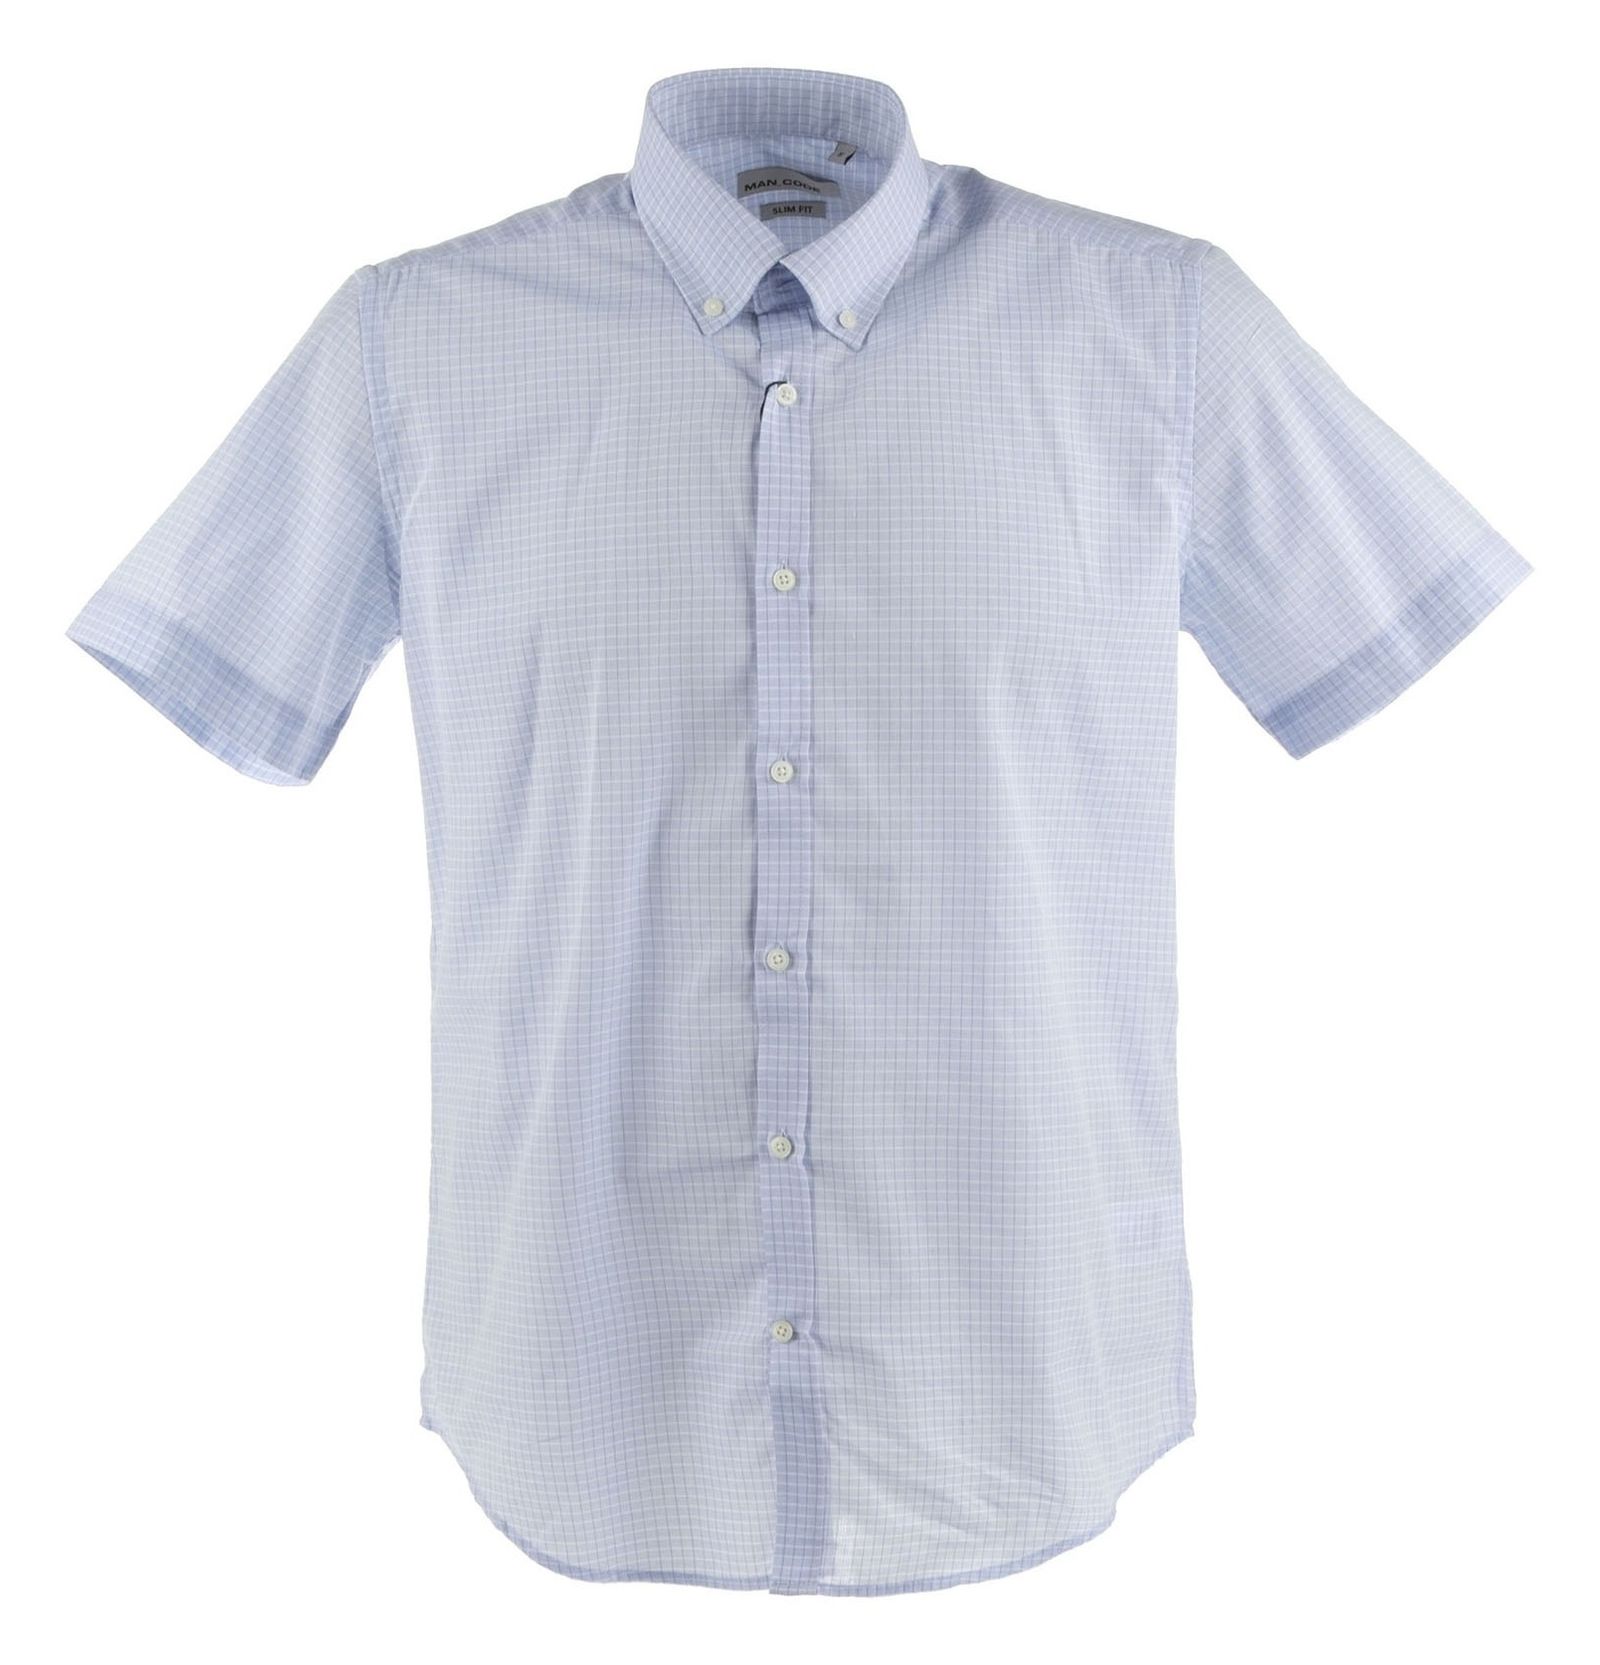 پیراهن آستین کوتاه مردانه - یوپیم - آبي  - 2